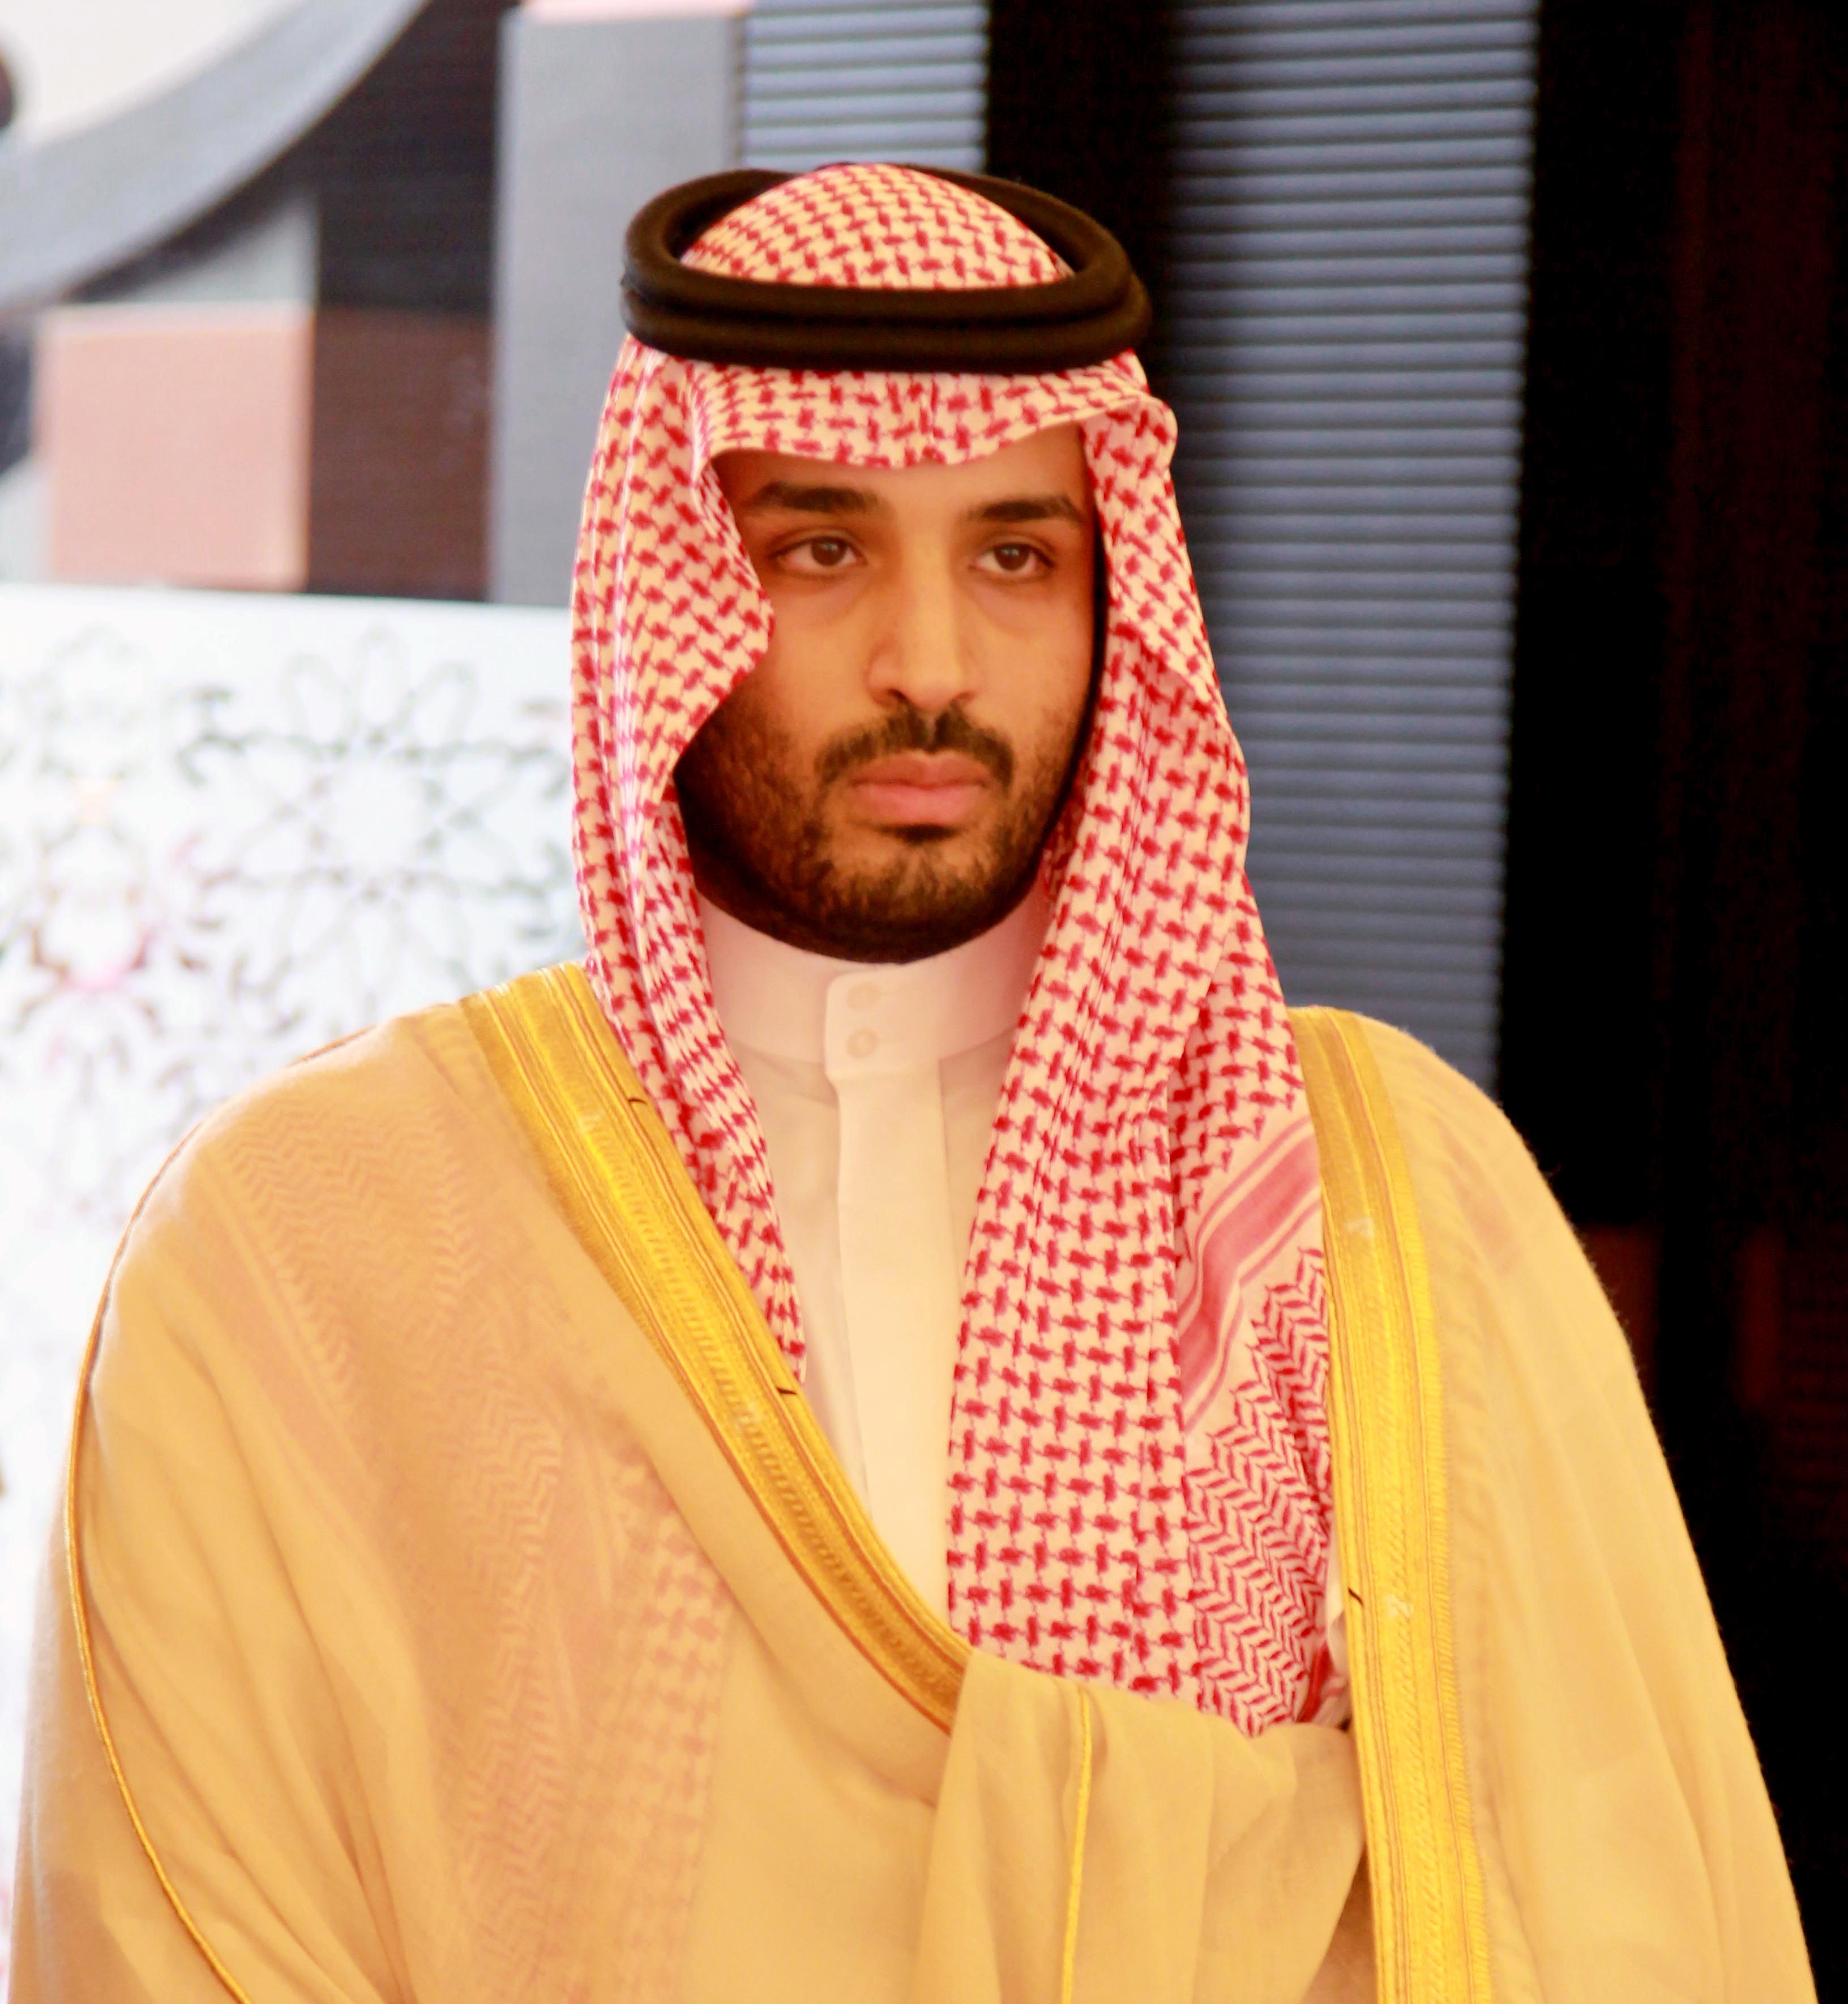 Prince Mohammad bin Salman bin Abdulaziz